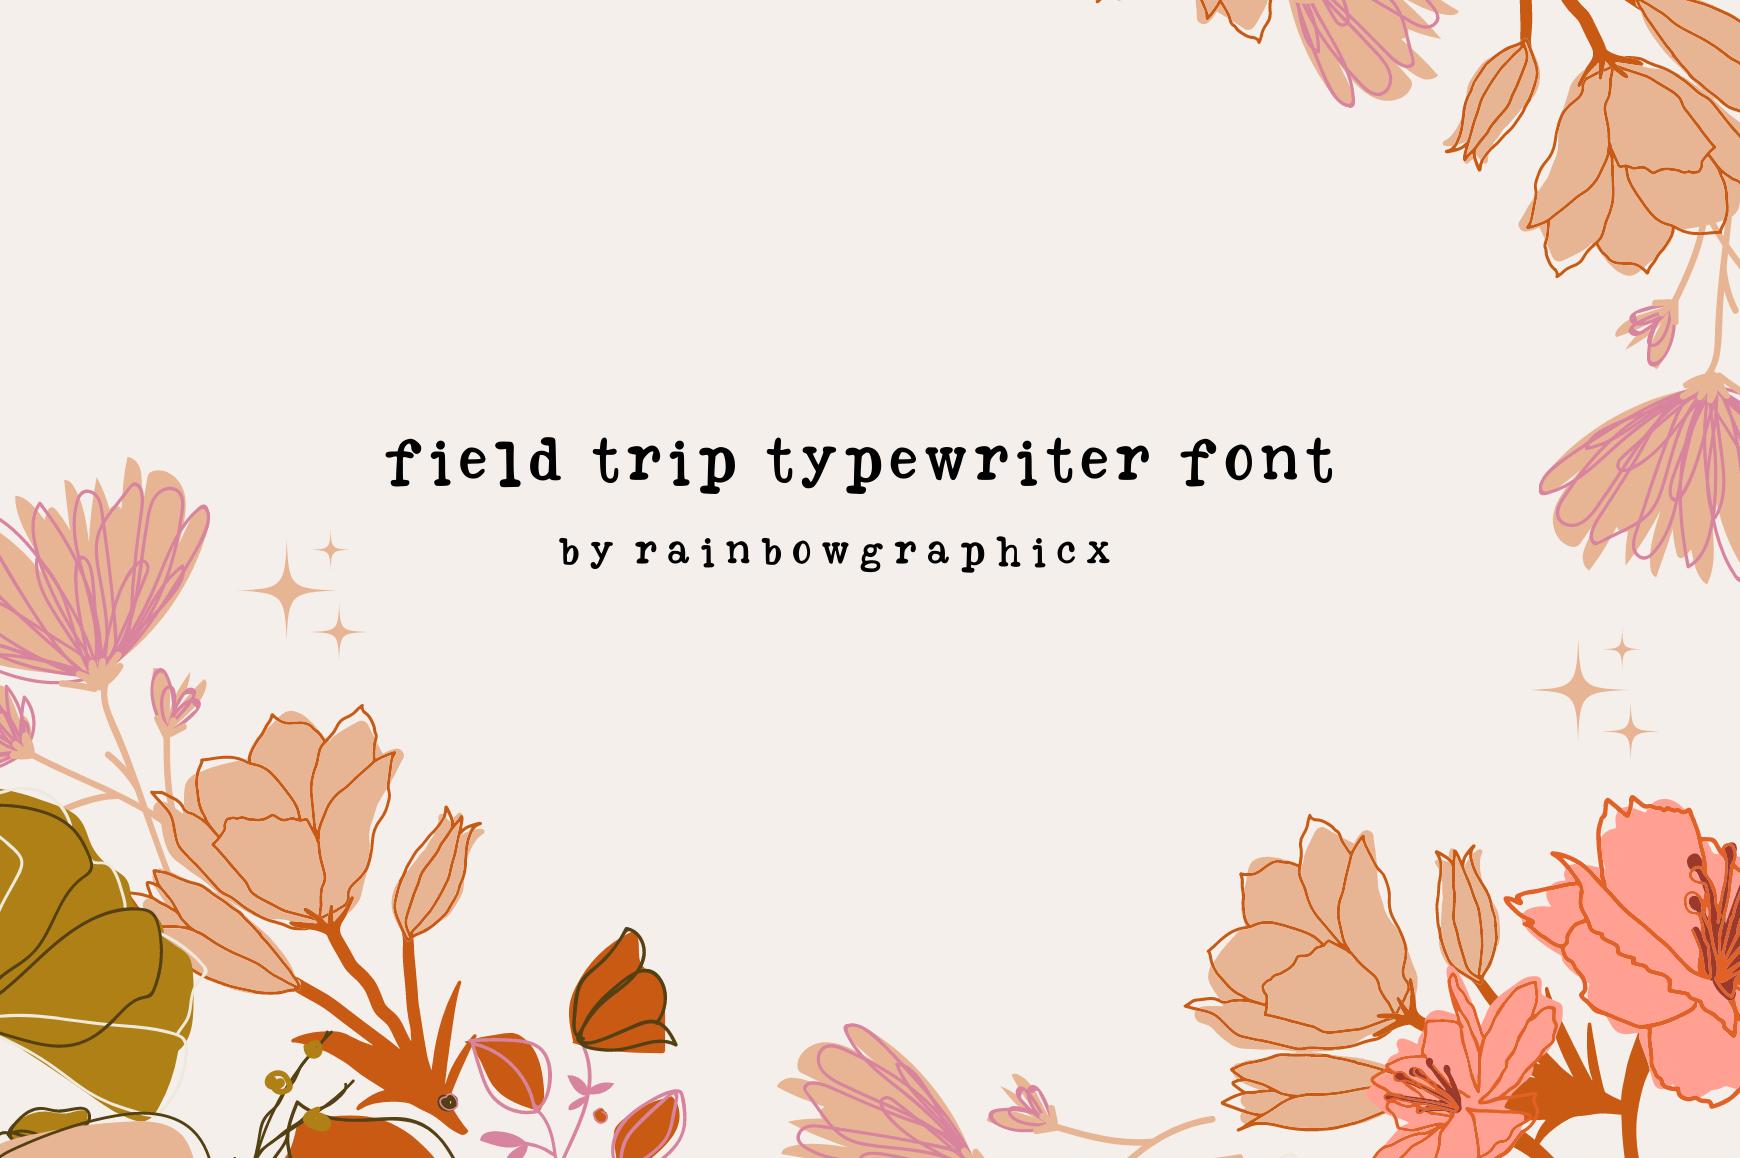 Field Trip Typewriter Font